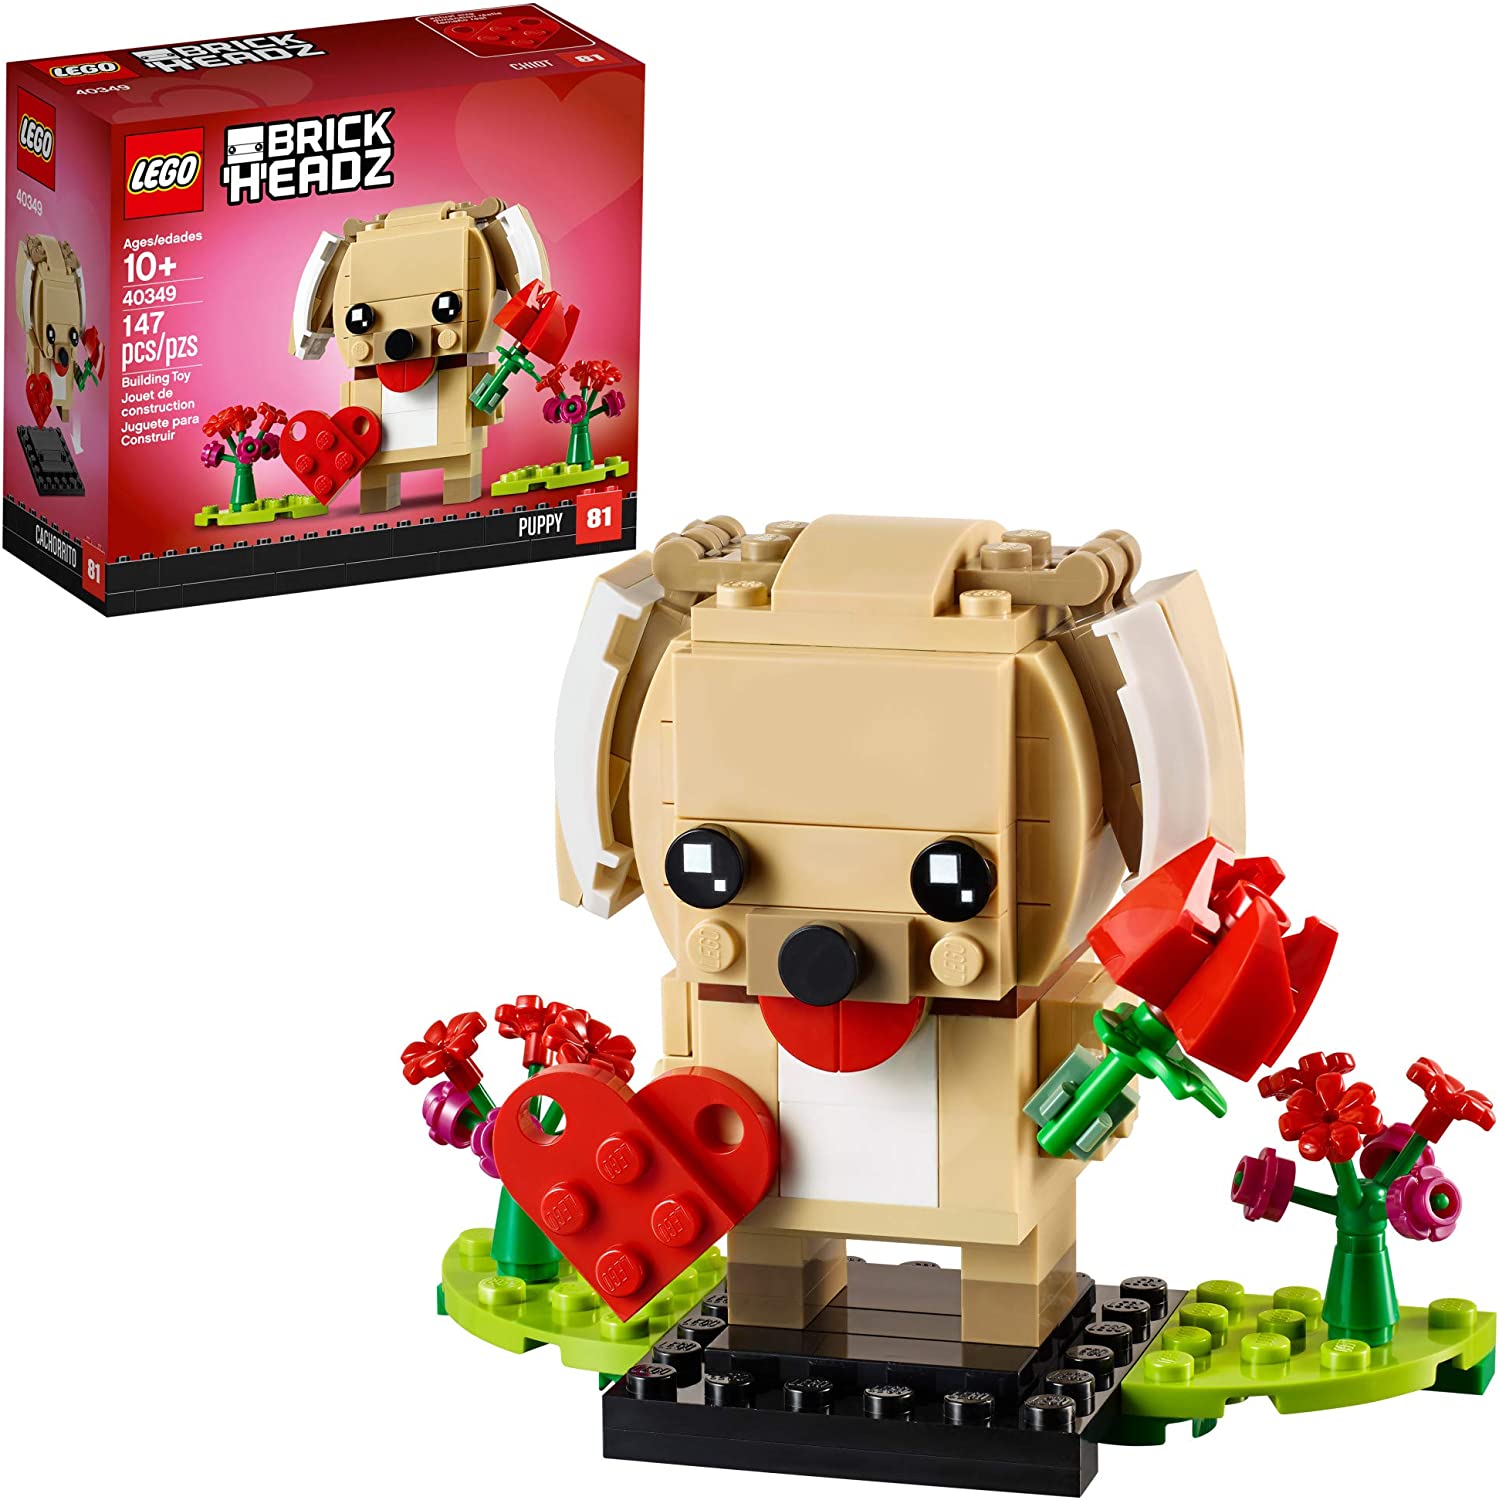 Lego BrickHeadz Valentine's puppy building kit